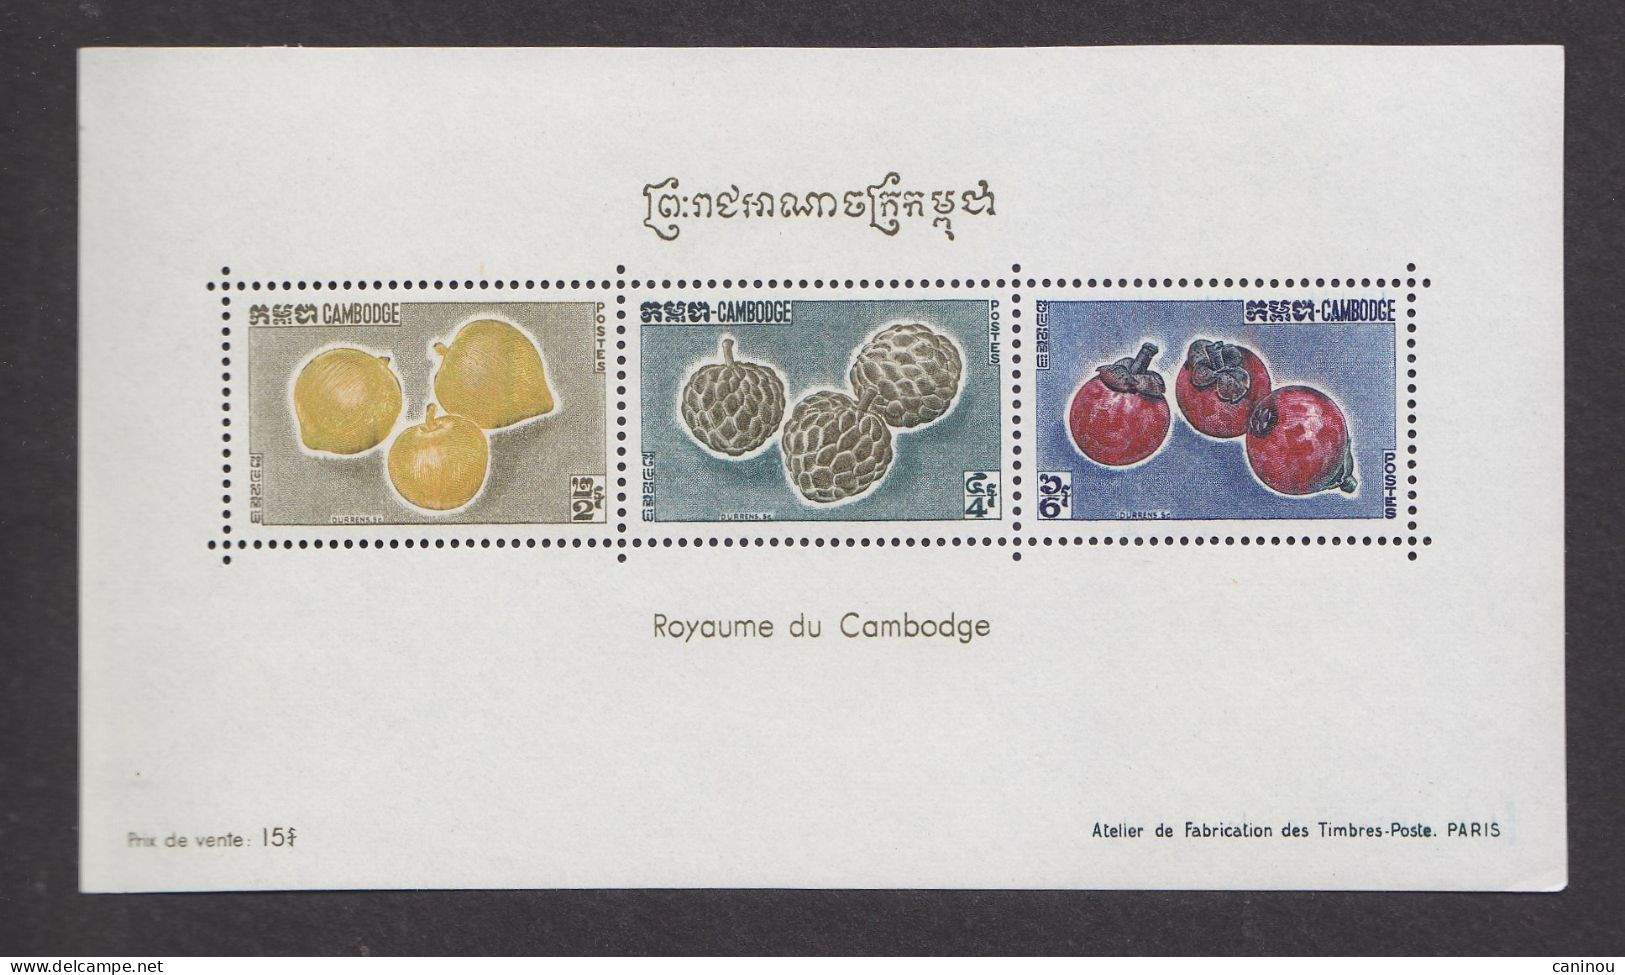 CAMBODGE BF 23 FRUITS 1962 NEUF SANS CHARNIERES - Kambodscha